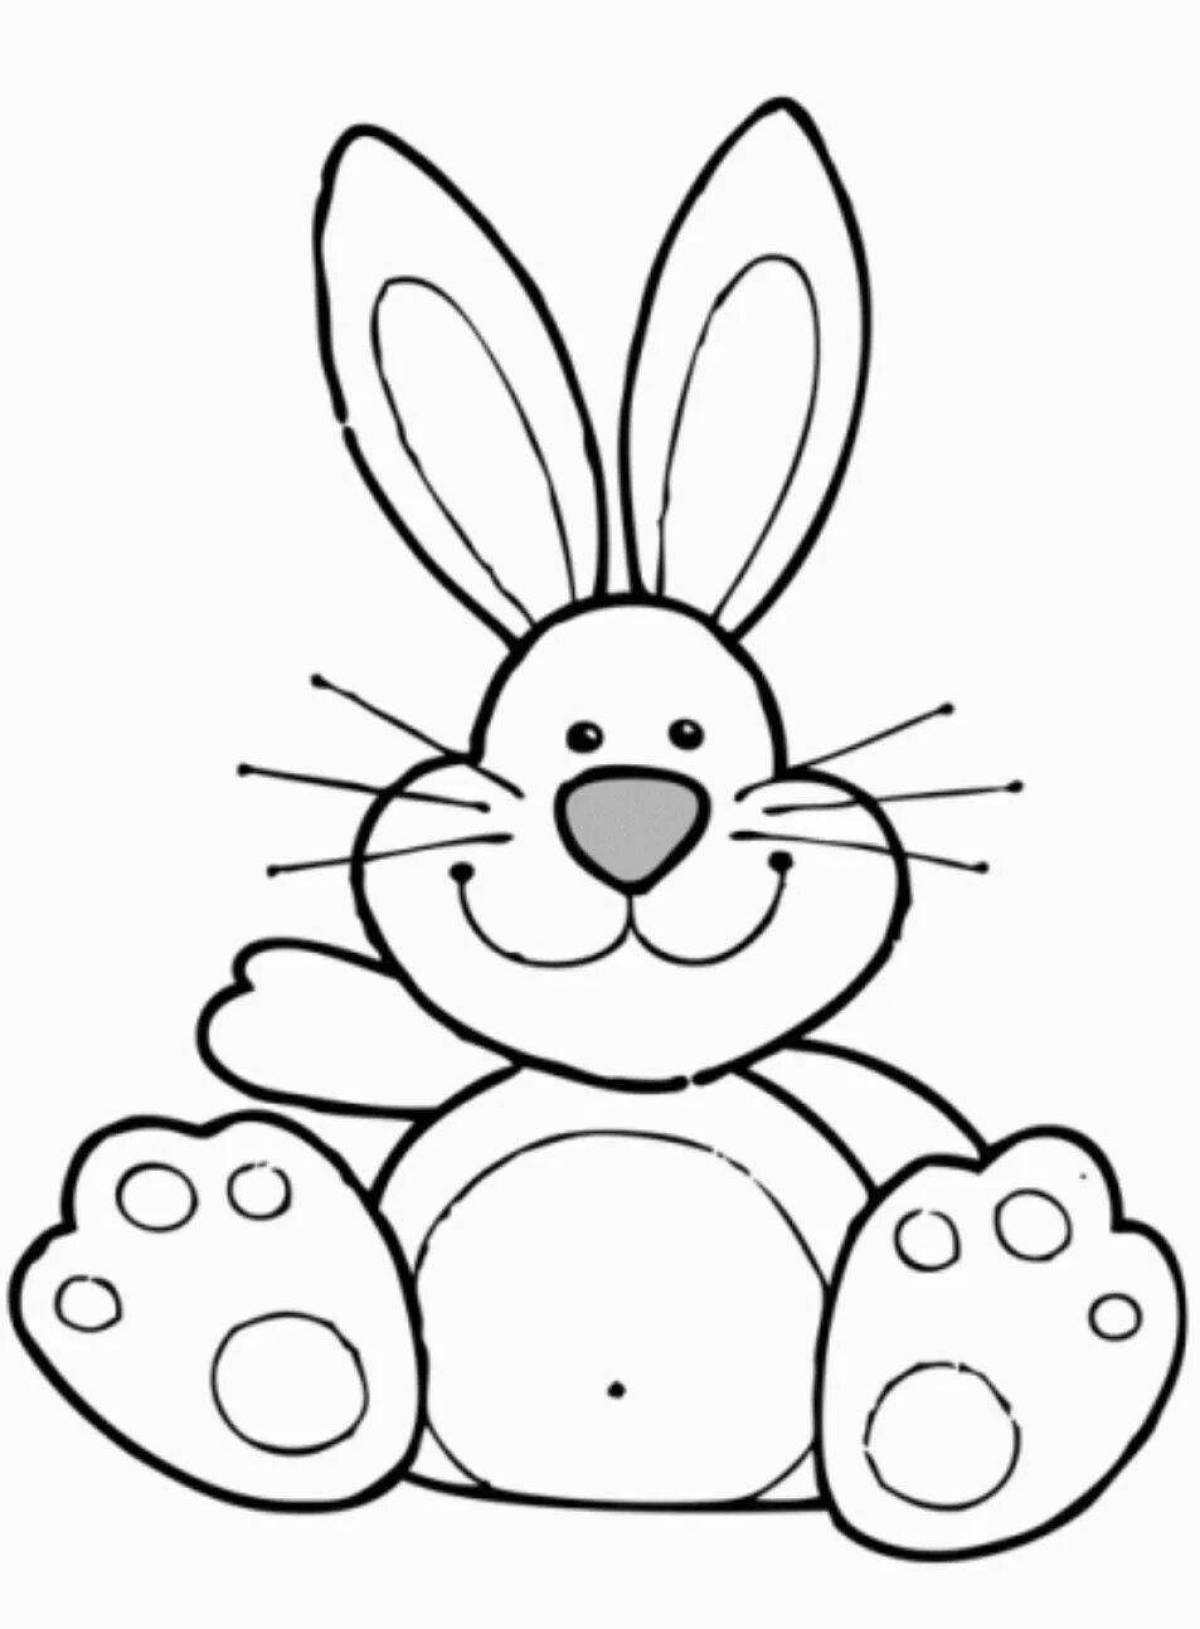 Fun coloring page rabbit